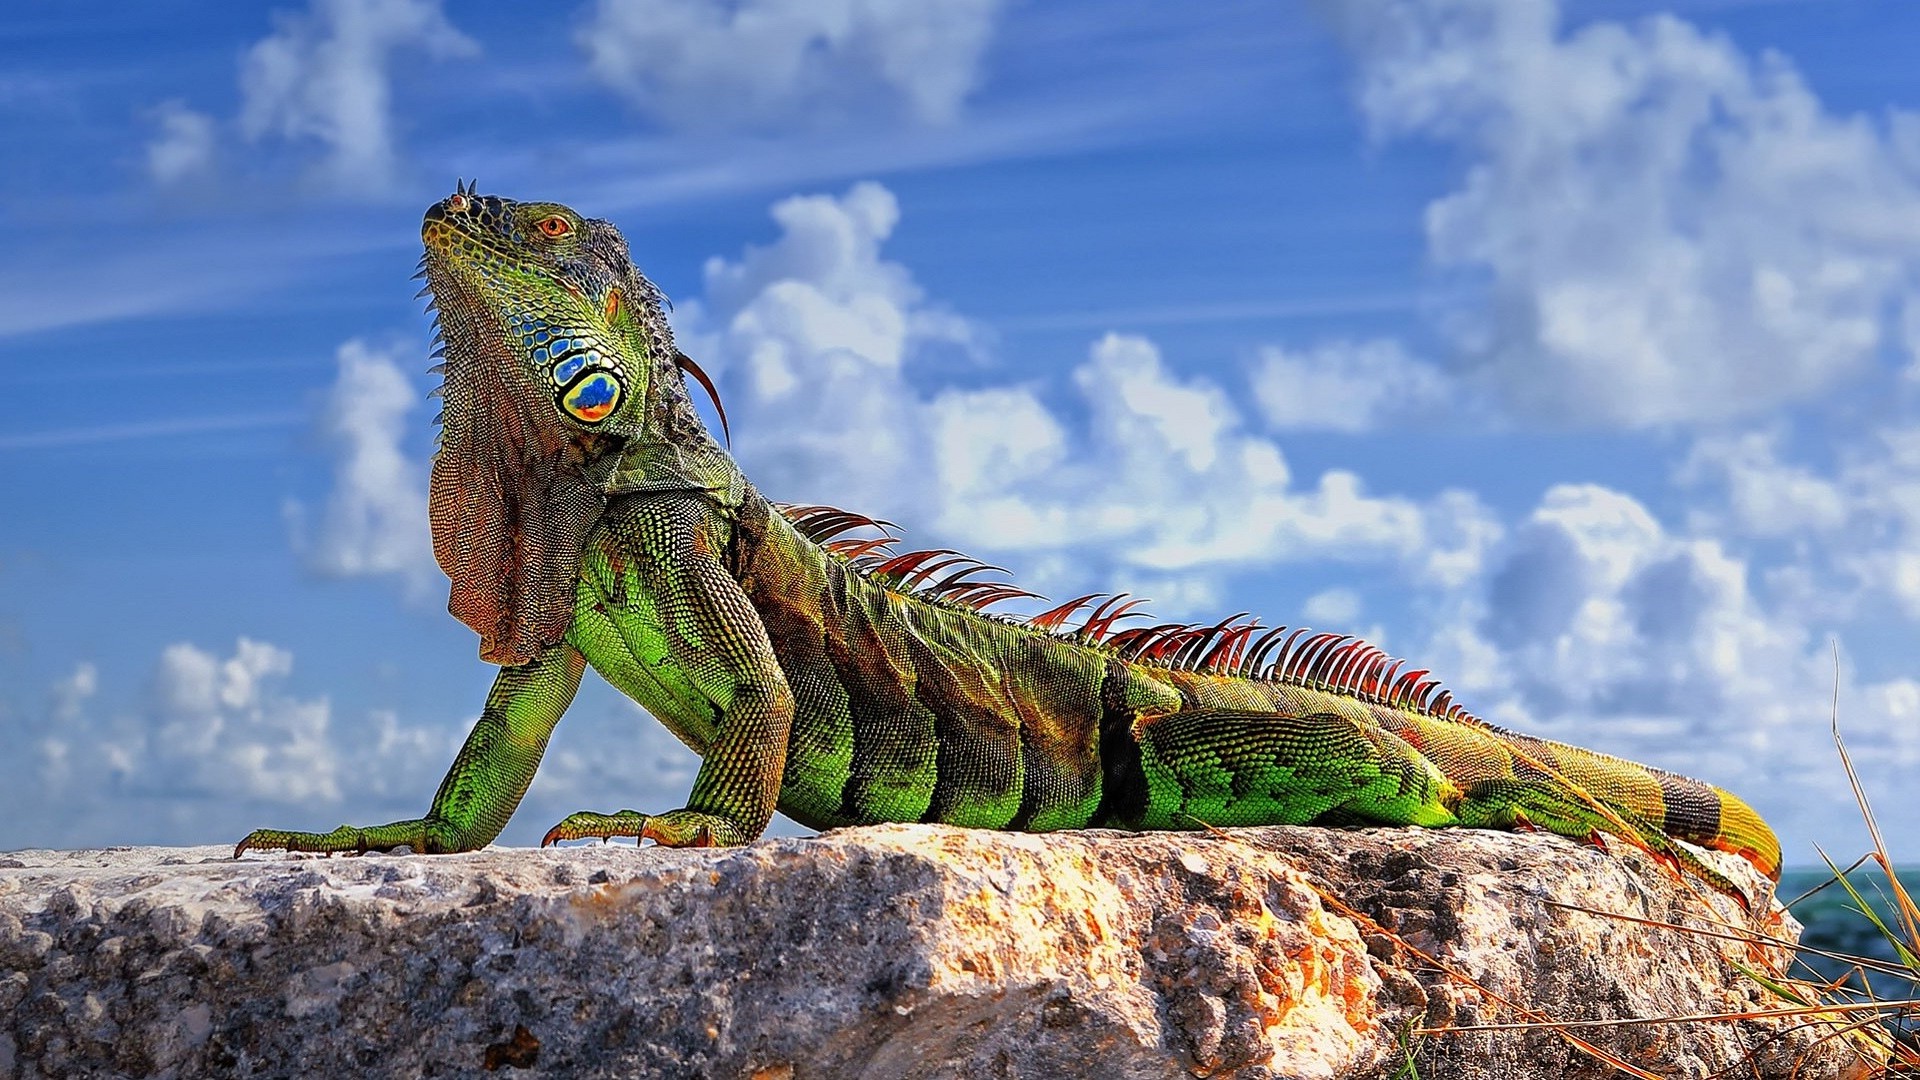 lizards, Animals, Reptile, Rock, Sky, Clouds, Closeup, Colorful, Sunlight, Iguana Wallpaper